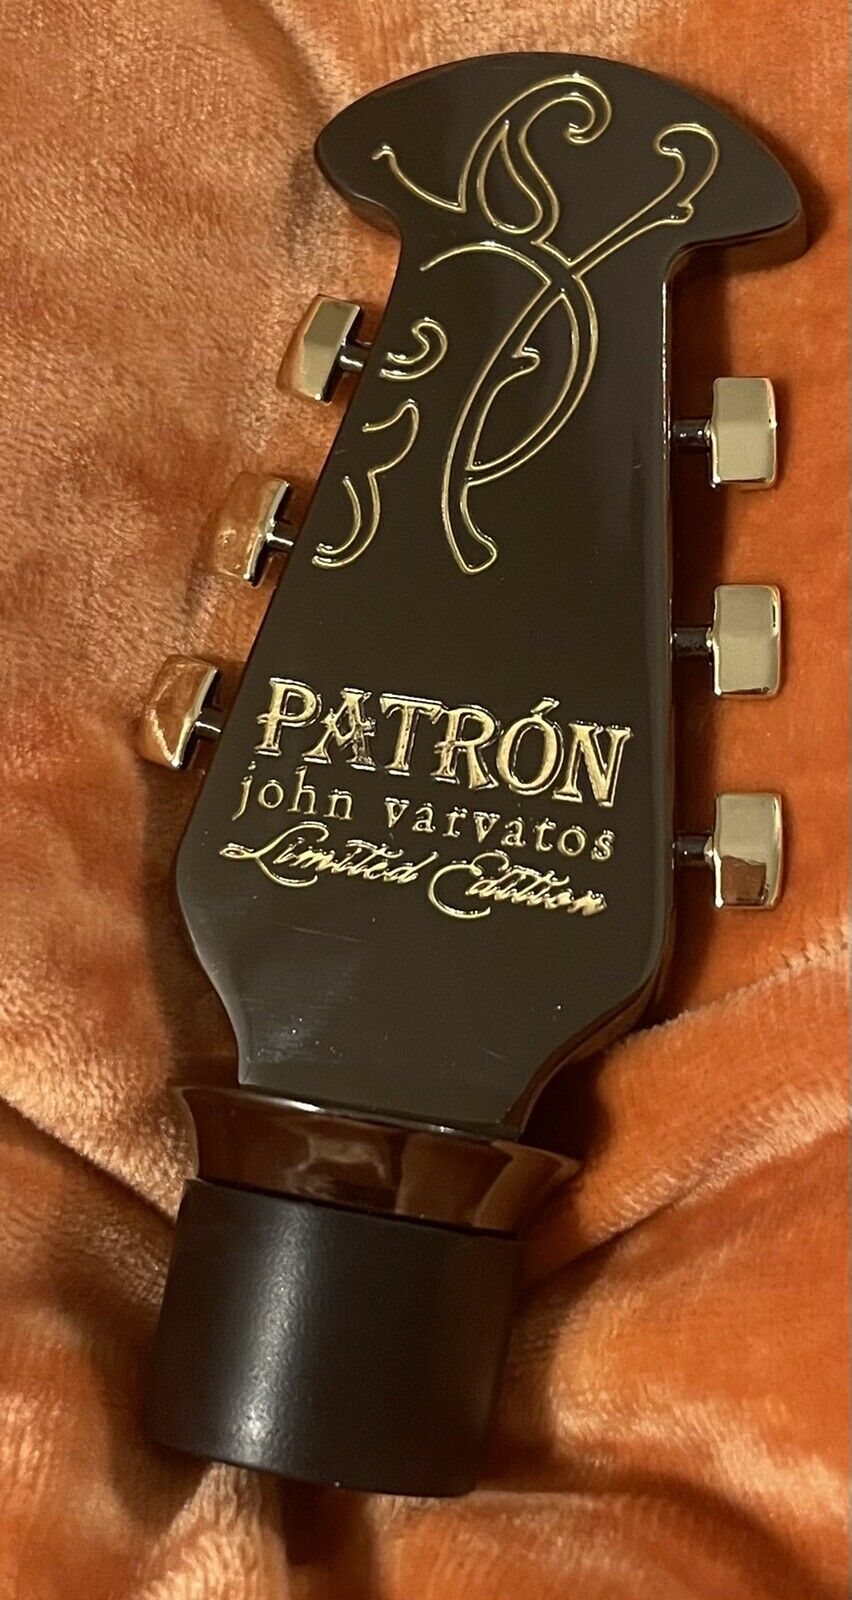 2012 John Varvatos Patron Limited Edition Guitar Head Bottle Stopper